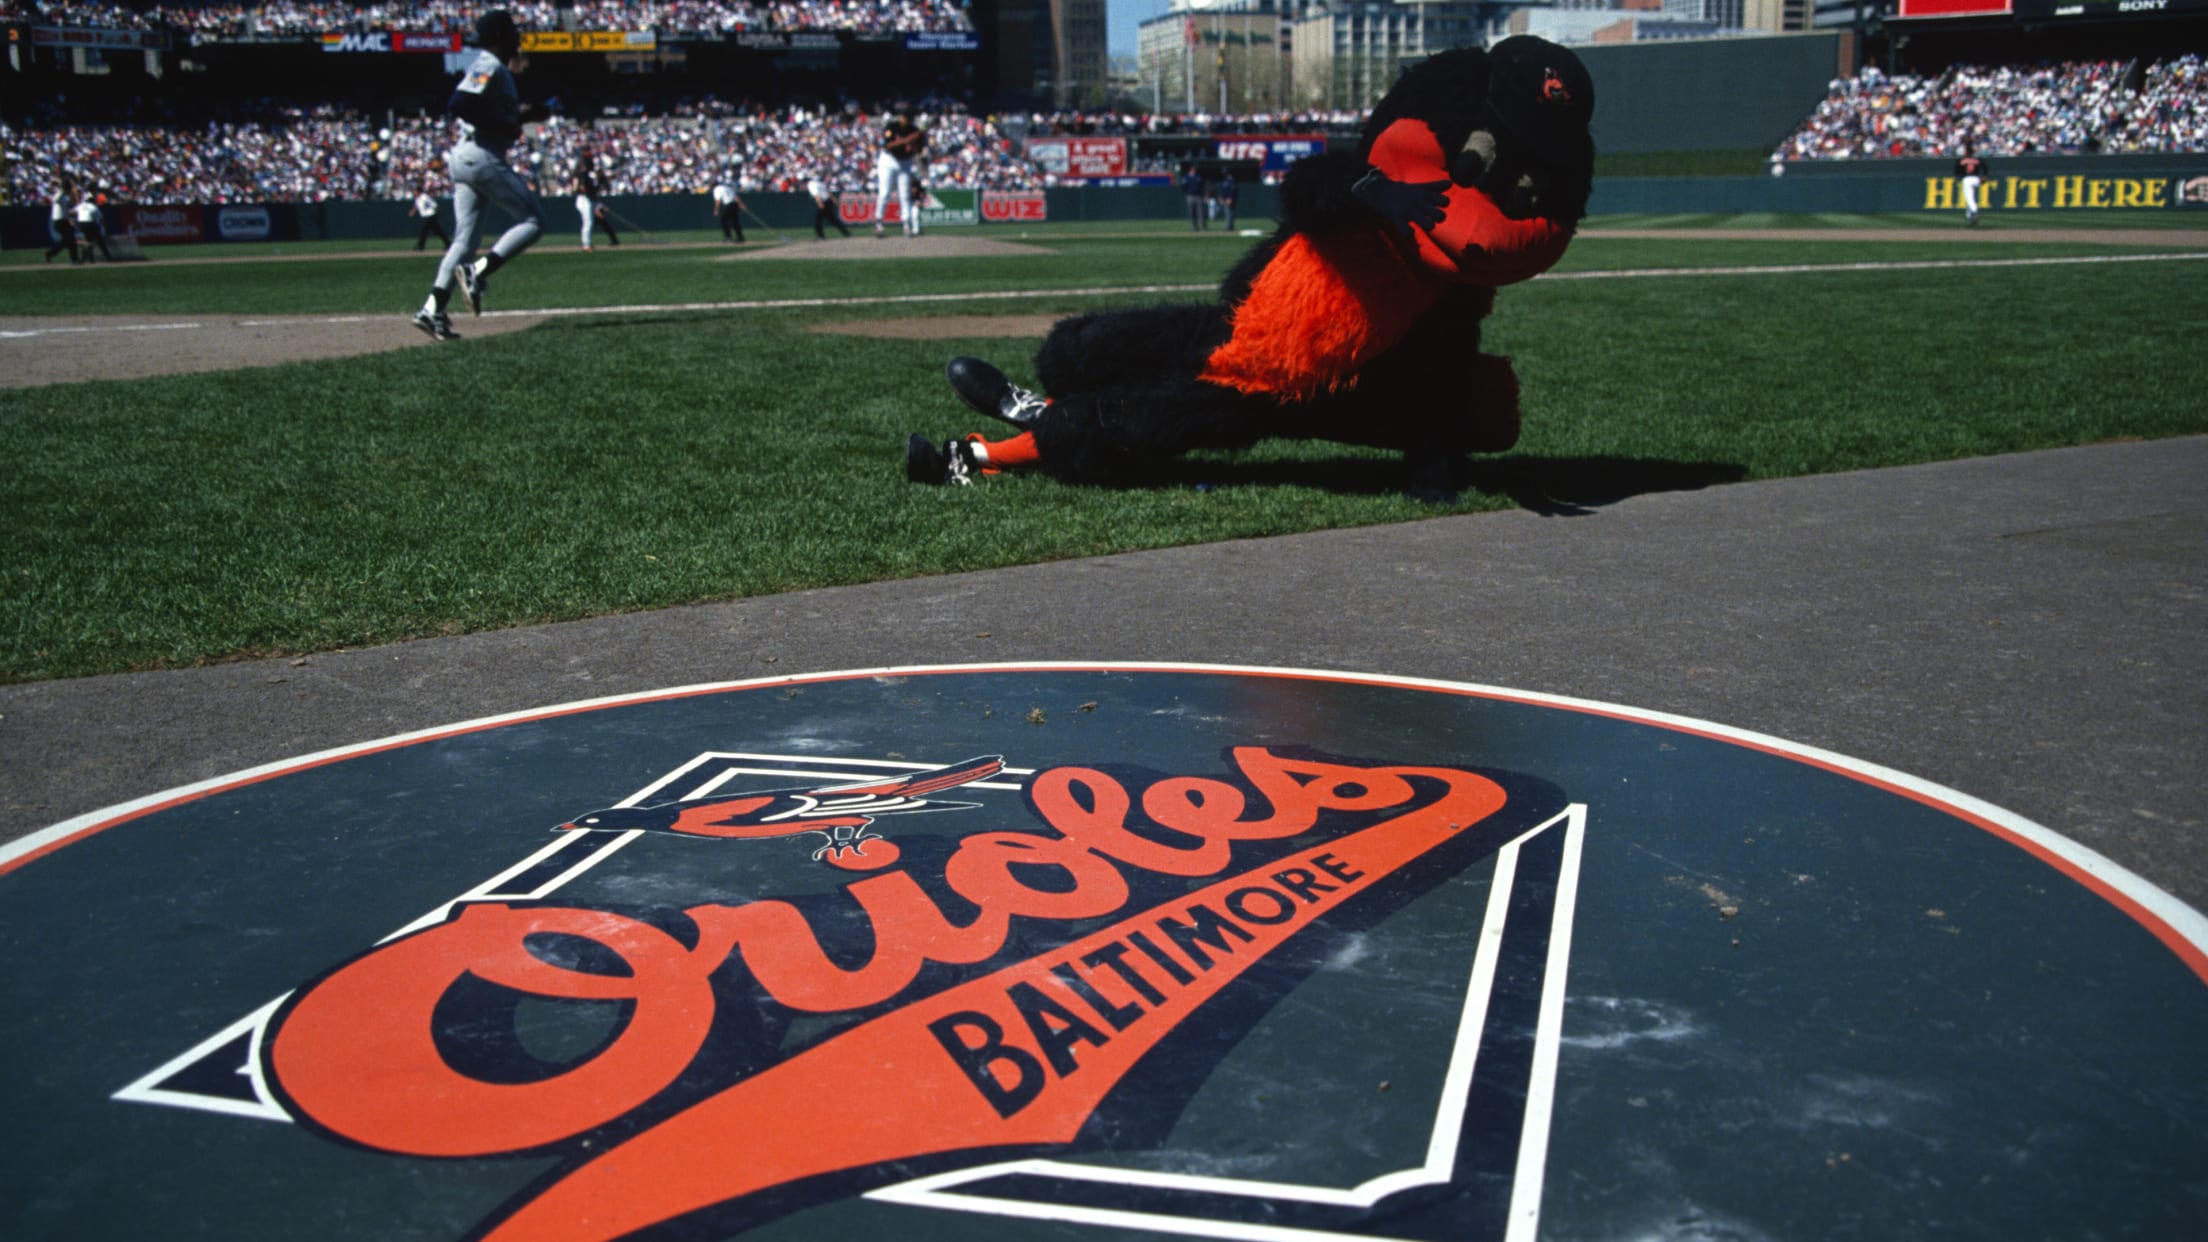 The Baltimore Orioles mascot performs during an interleague